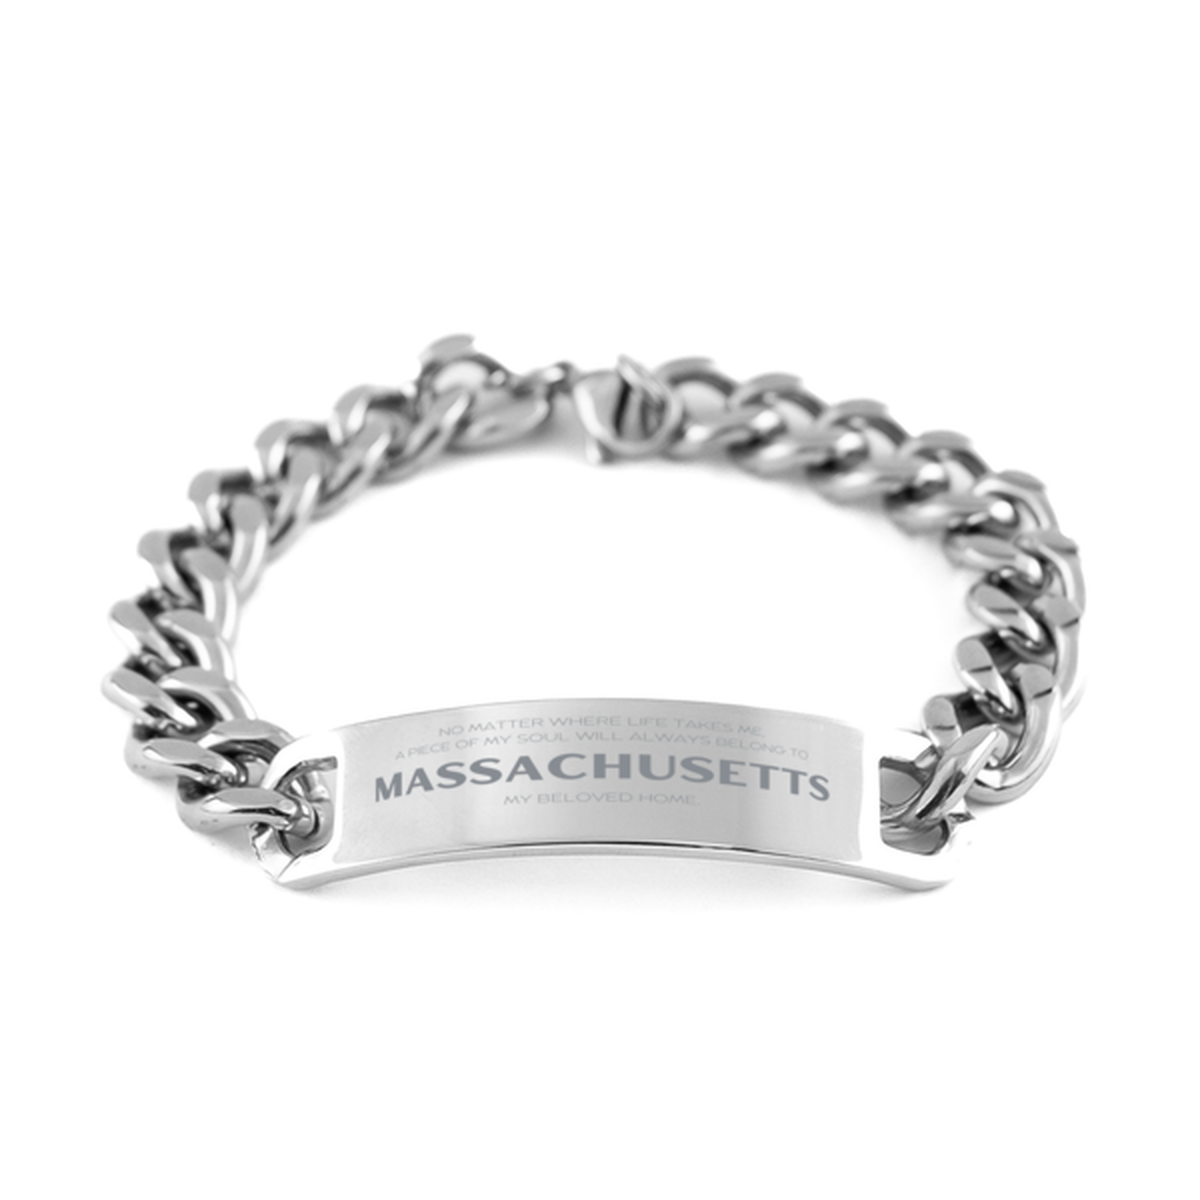 Love Massachusetts State Gifts, My soul will always belong to Massachusetts, Proud Cuban Chain Stainless Steel Bracelet, Birthday Unique Gifts For Massachusetts Men, Women, Friends